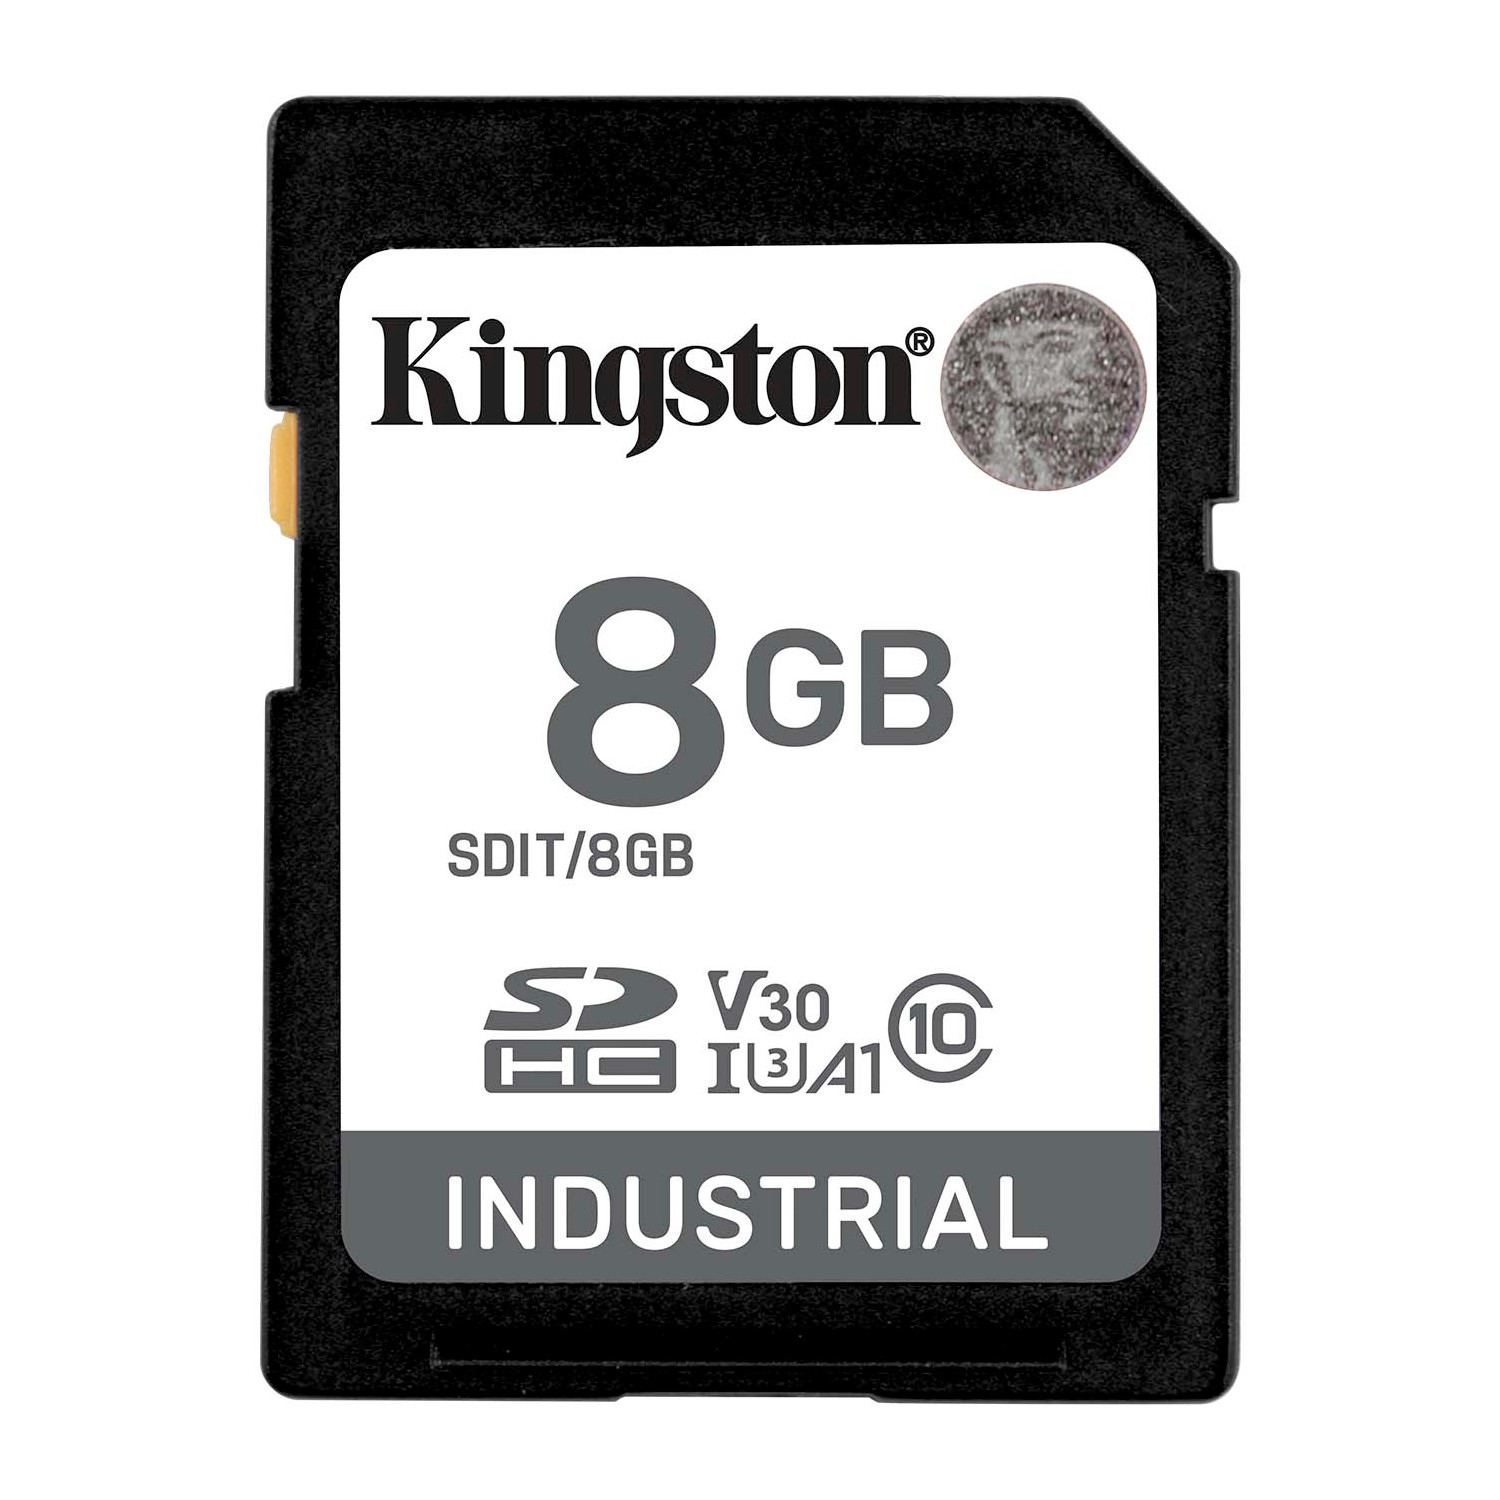 Kingston - SDIT-8GB -   